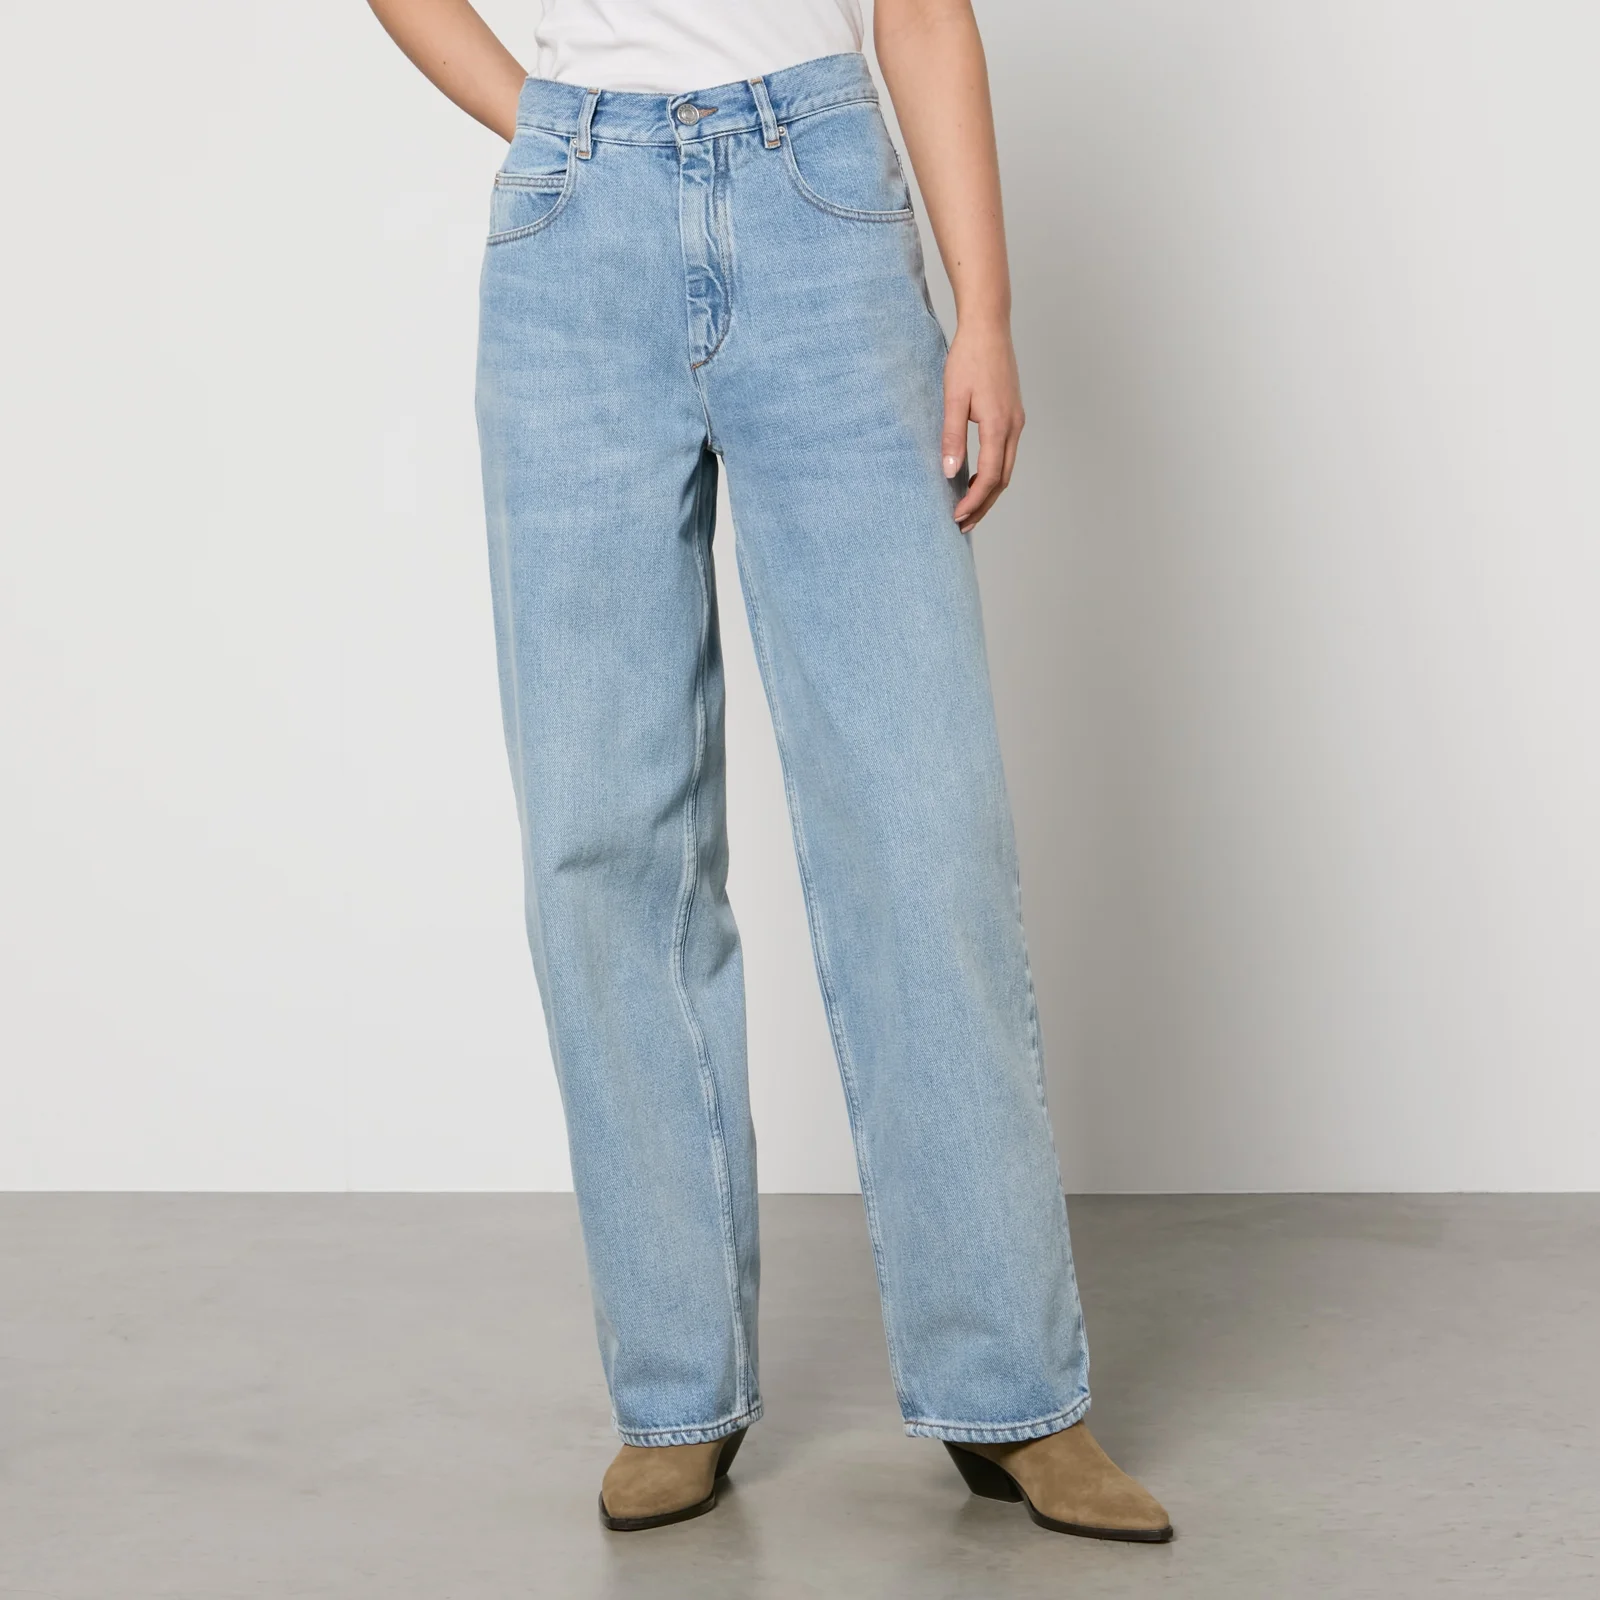 Marant Etoile Joanny Denim Jeans Image 1